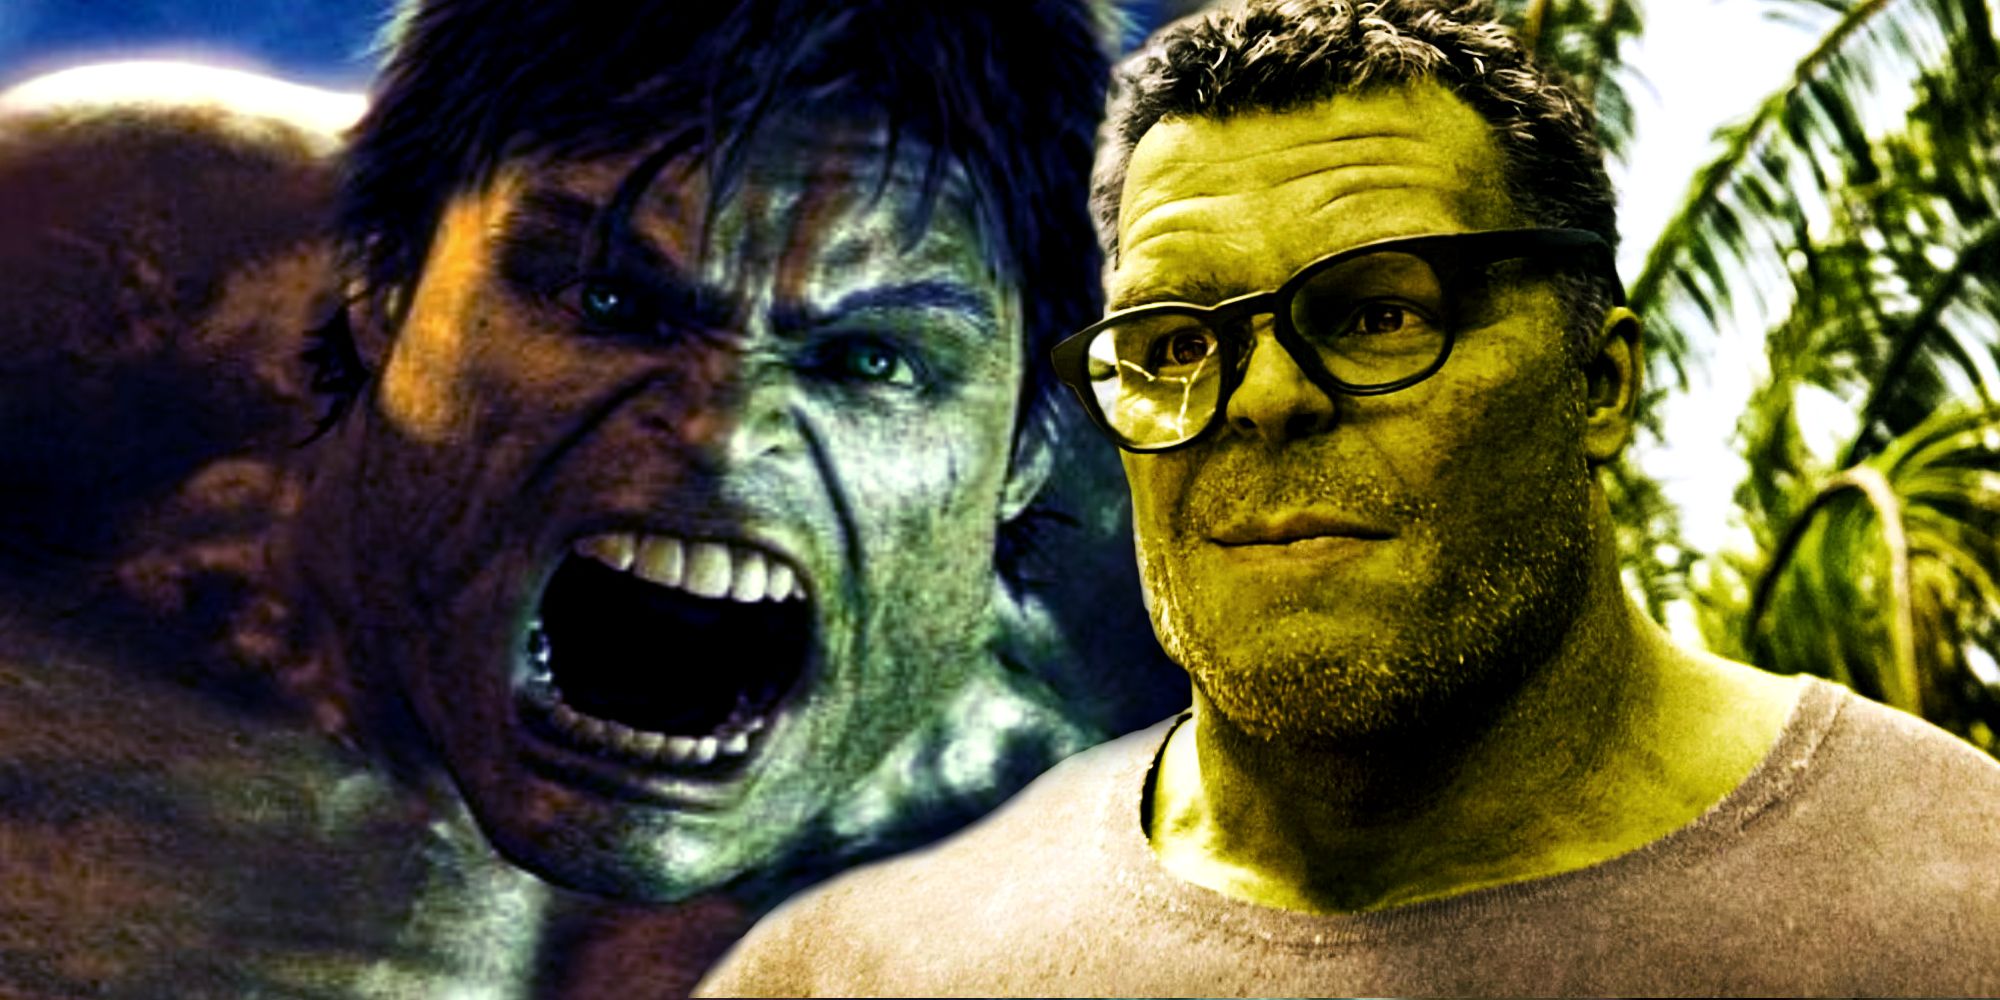 Hulk and Smart Hulk in the MCU